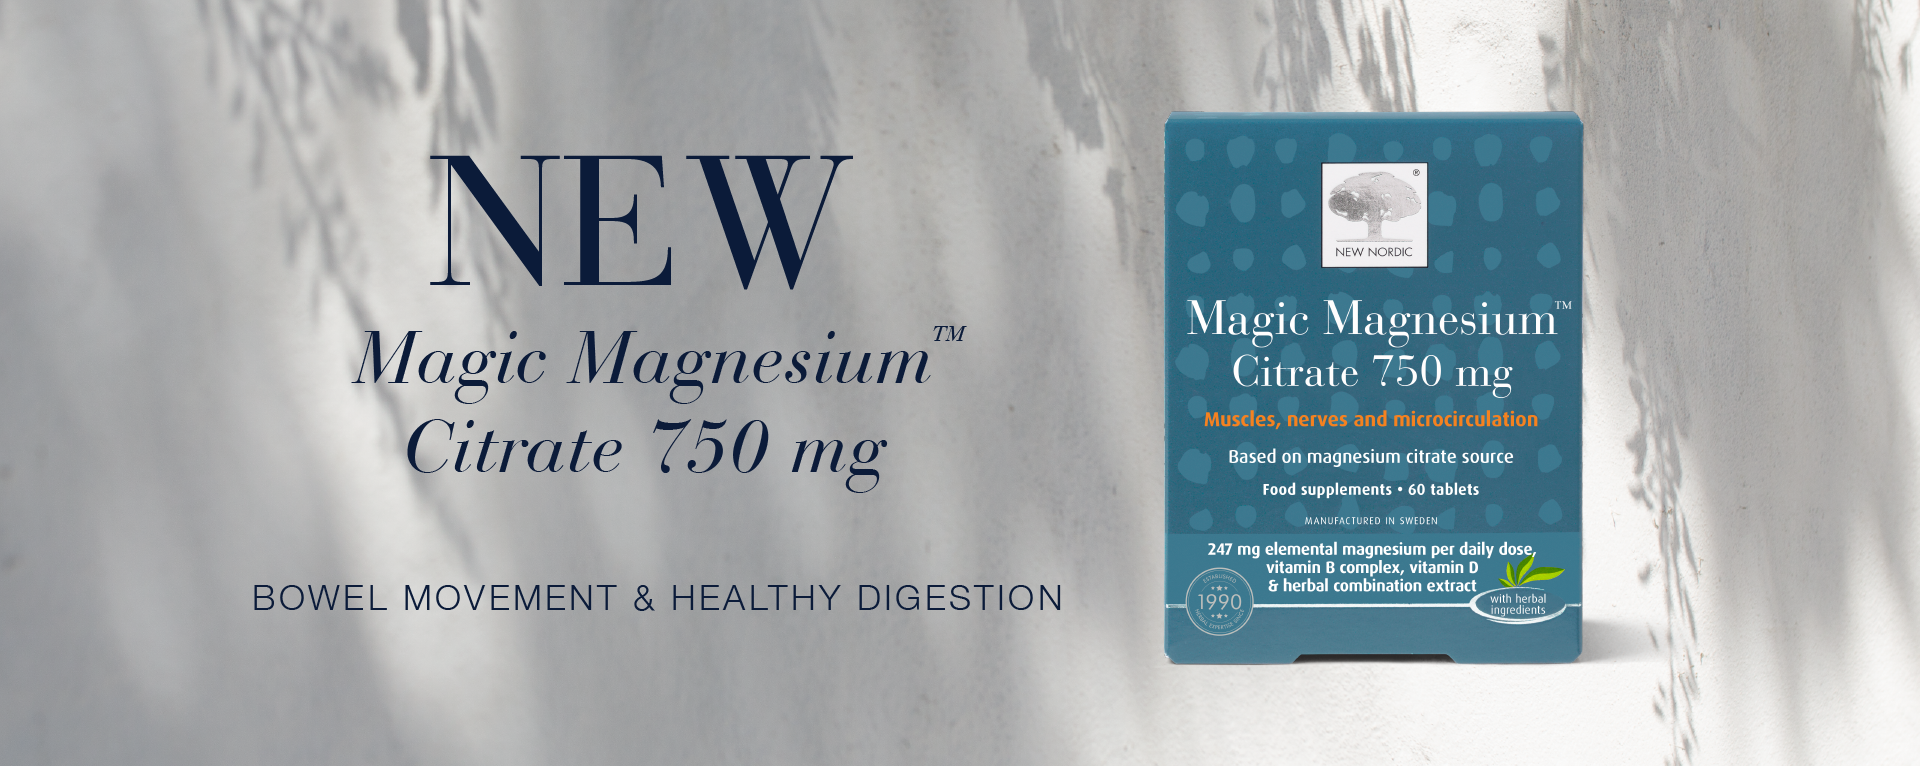 NEW Magic Magnesium™ Citrate 750 mg pack